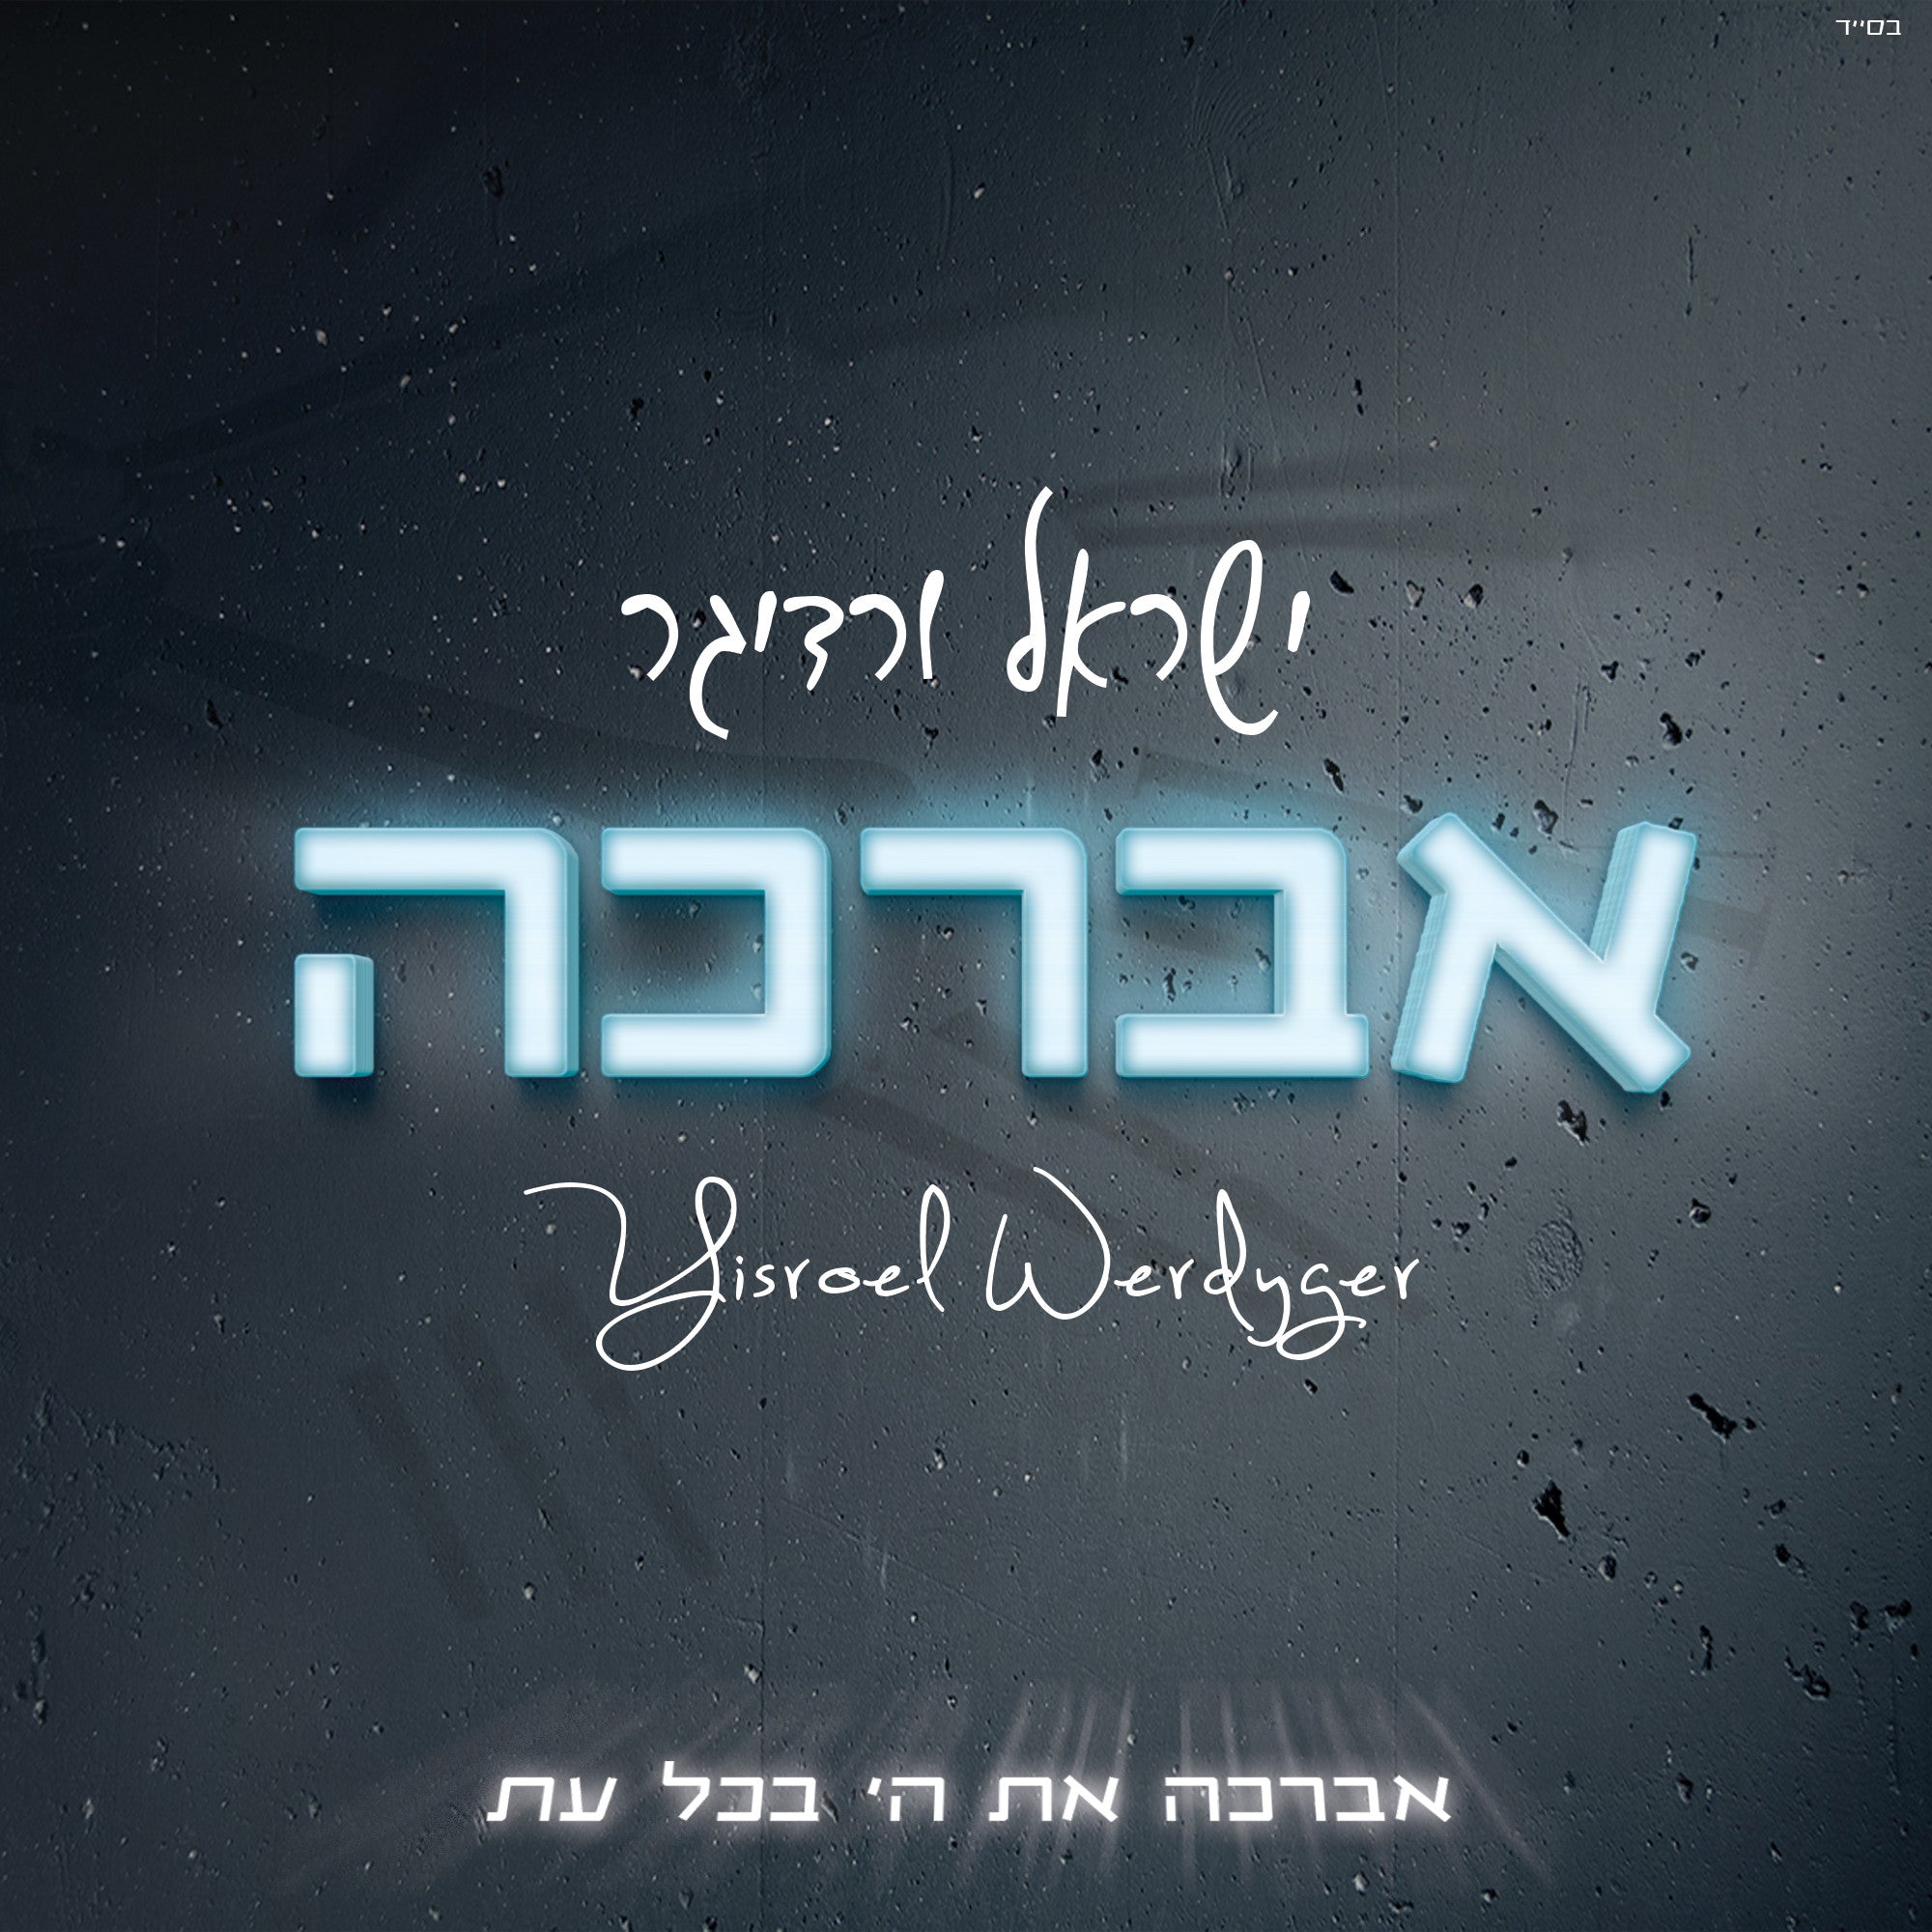 Yisroel Werdyger - Avorcho